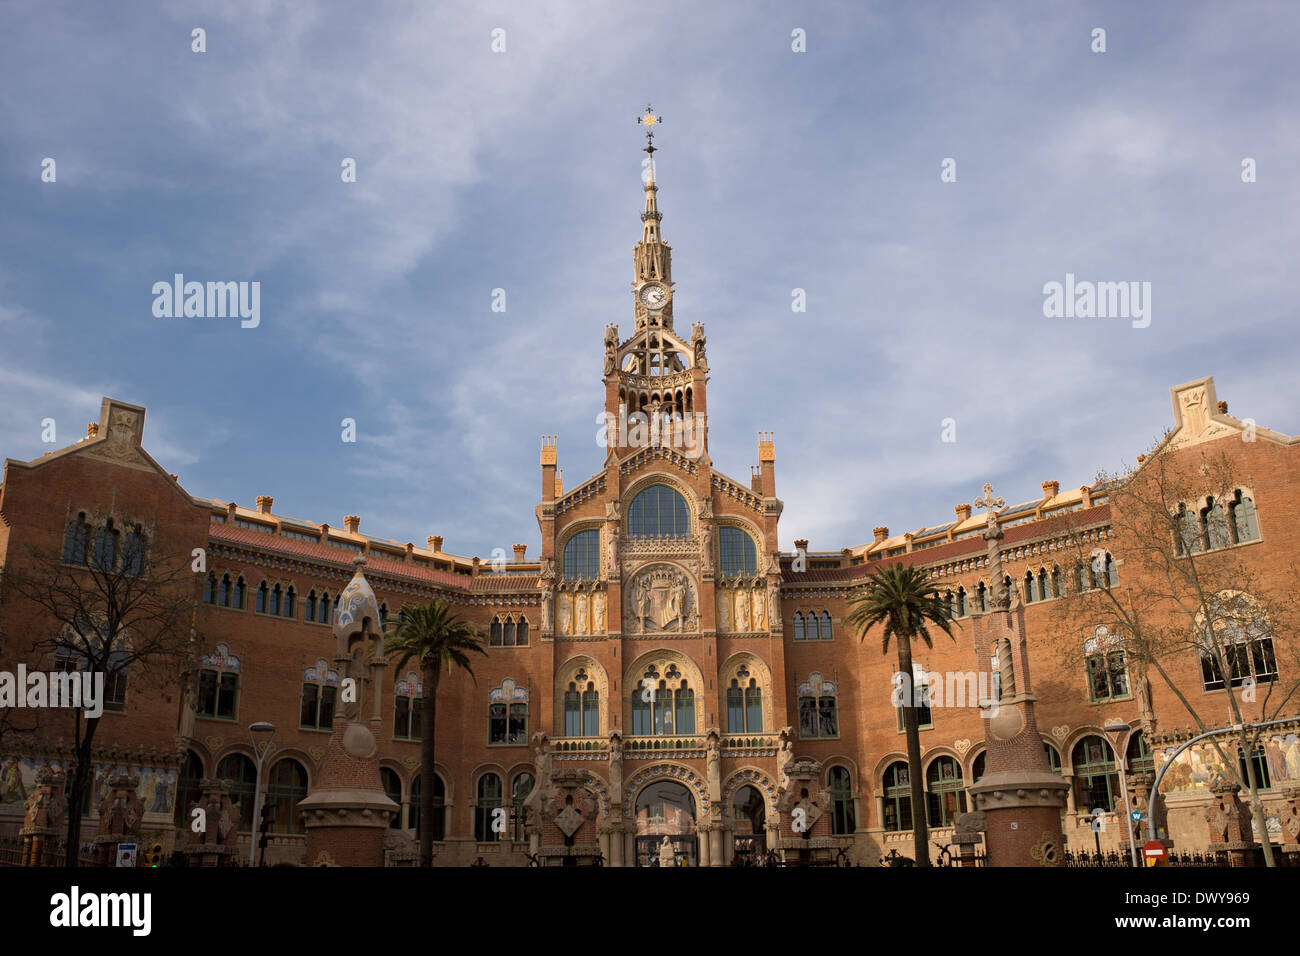 Hospital De La Santa Creu ich Sant Pau, modernistischen Gebäude in Barcelona, Spanien. Stockfoto